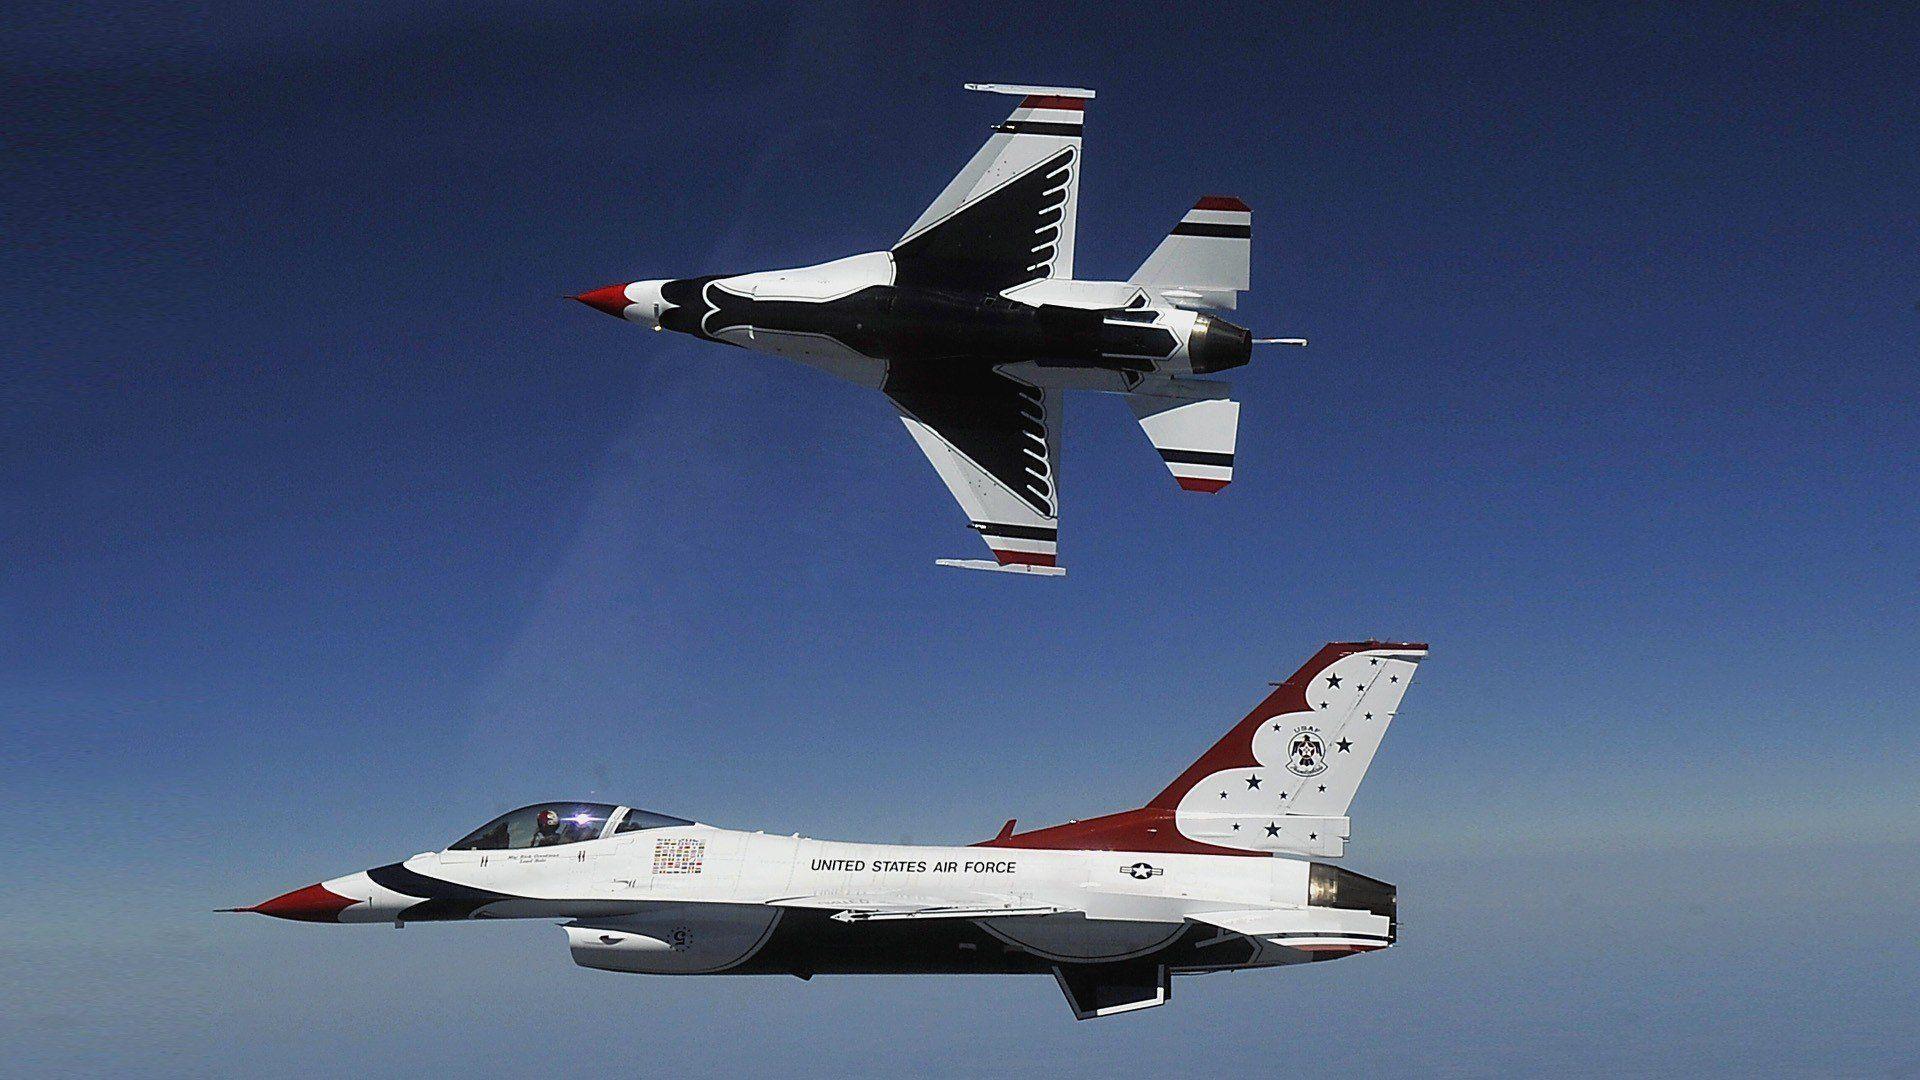 Air Force Thunderbirds Wallpaper 560295